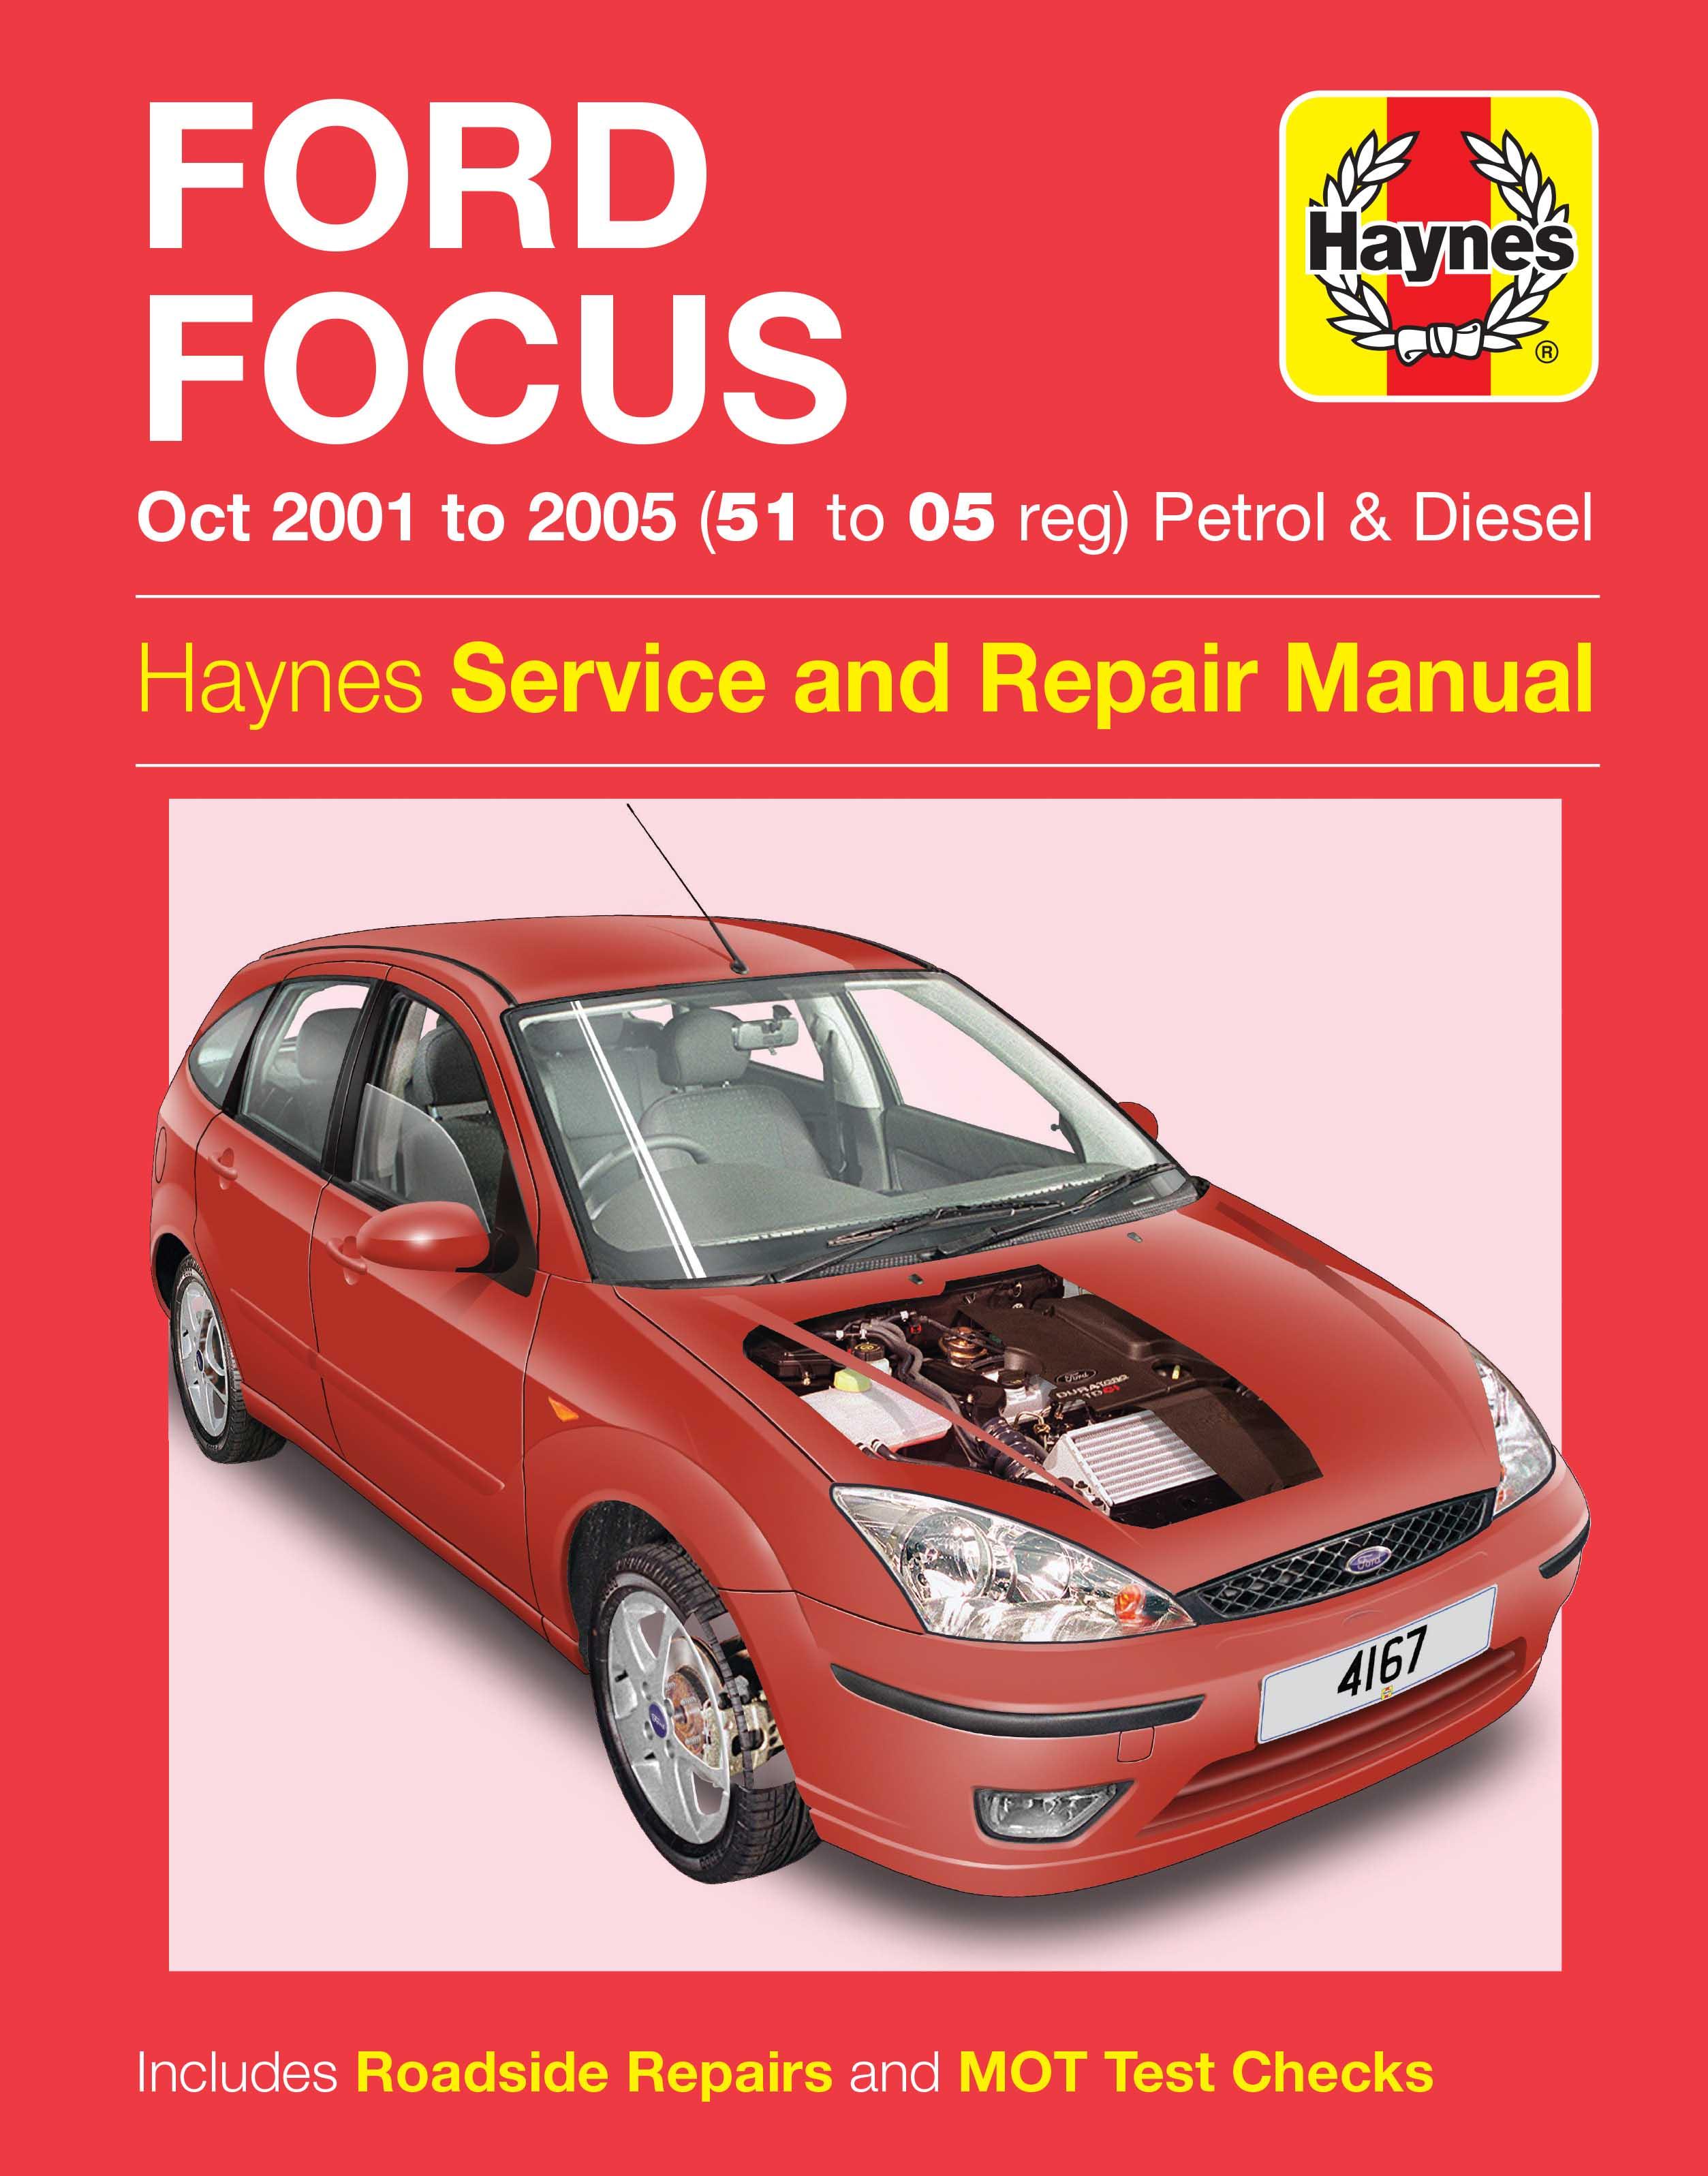 Haynes Ford Focus (Oct 01 - 05) Manual